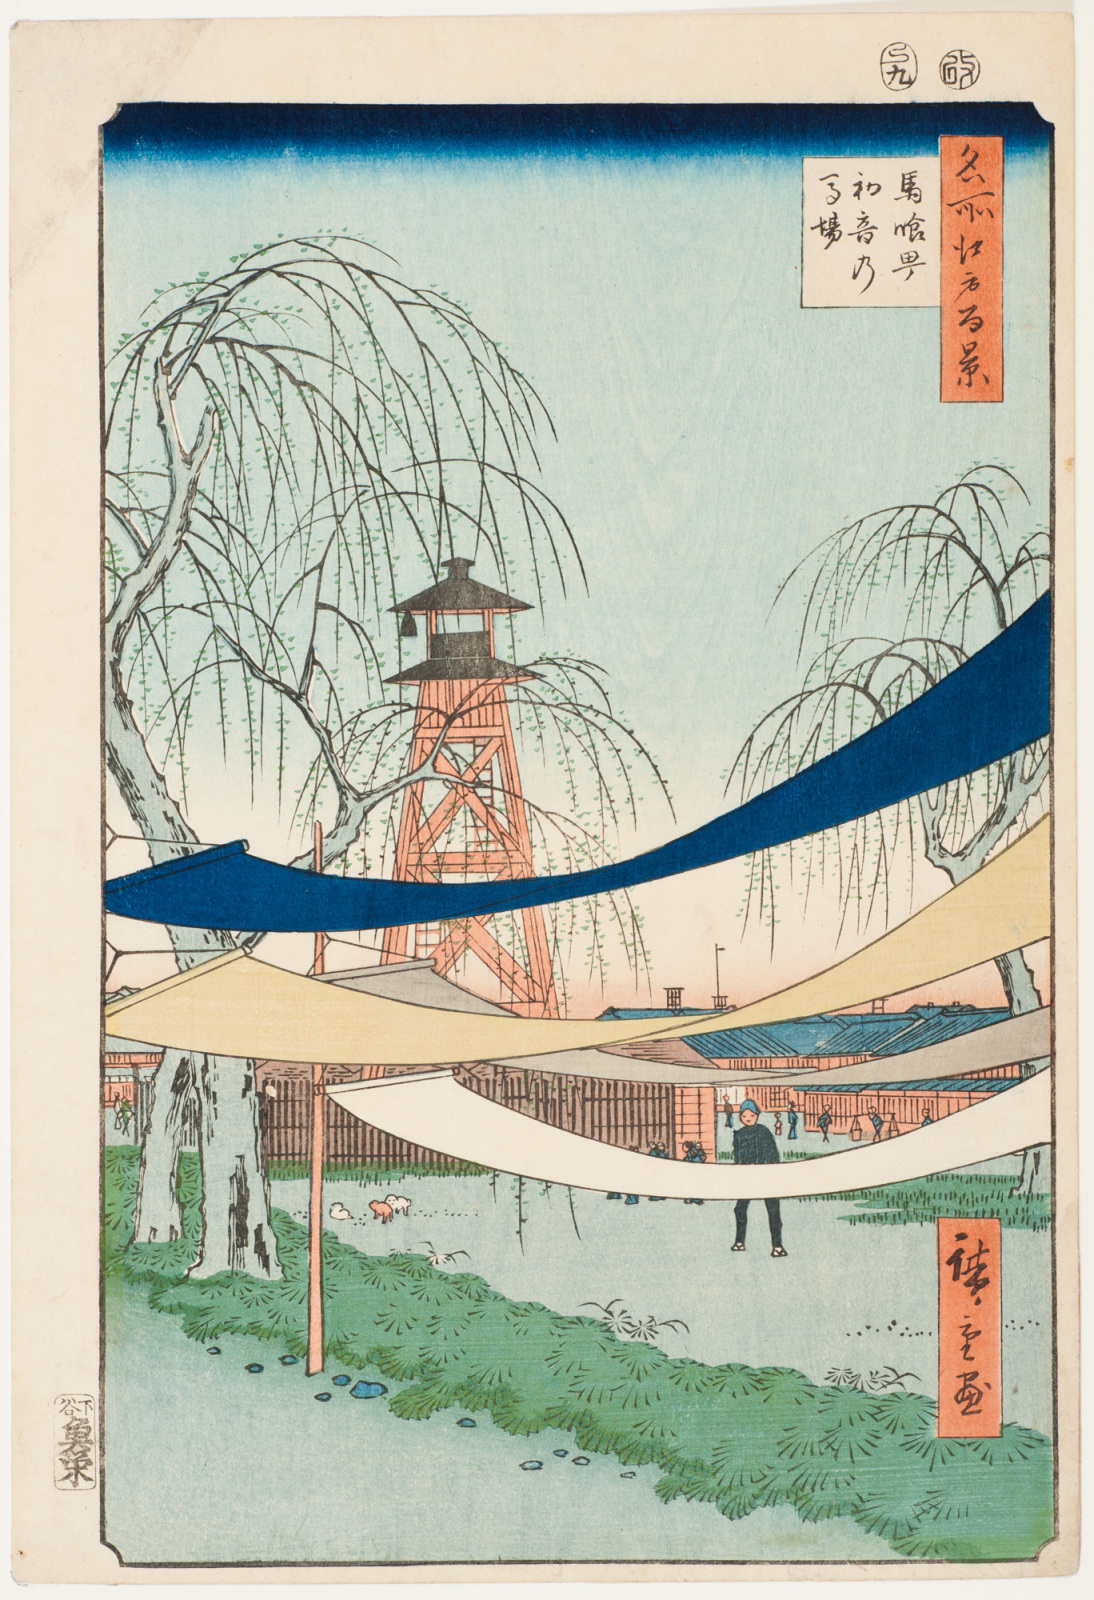 Teren de echitație Hatsune by  Hiroshige - 1856 - 34 x 22.9 cm 